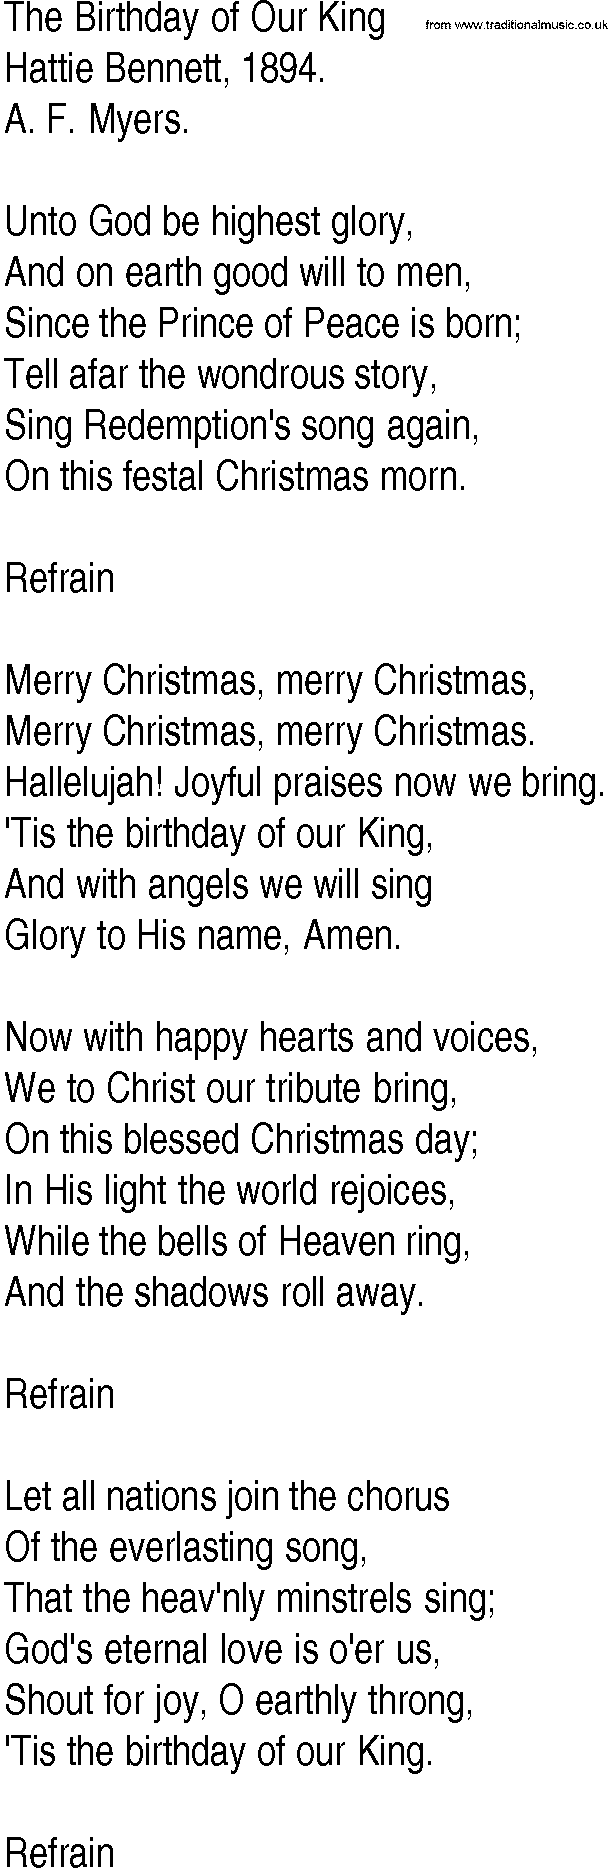 Hymn and Gospel Song: The Birthday of Our King by Hattie Bennett lyrics